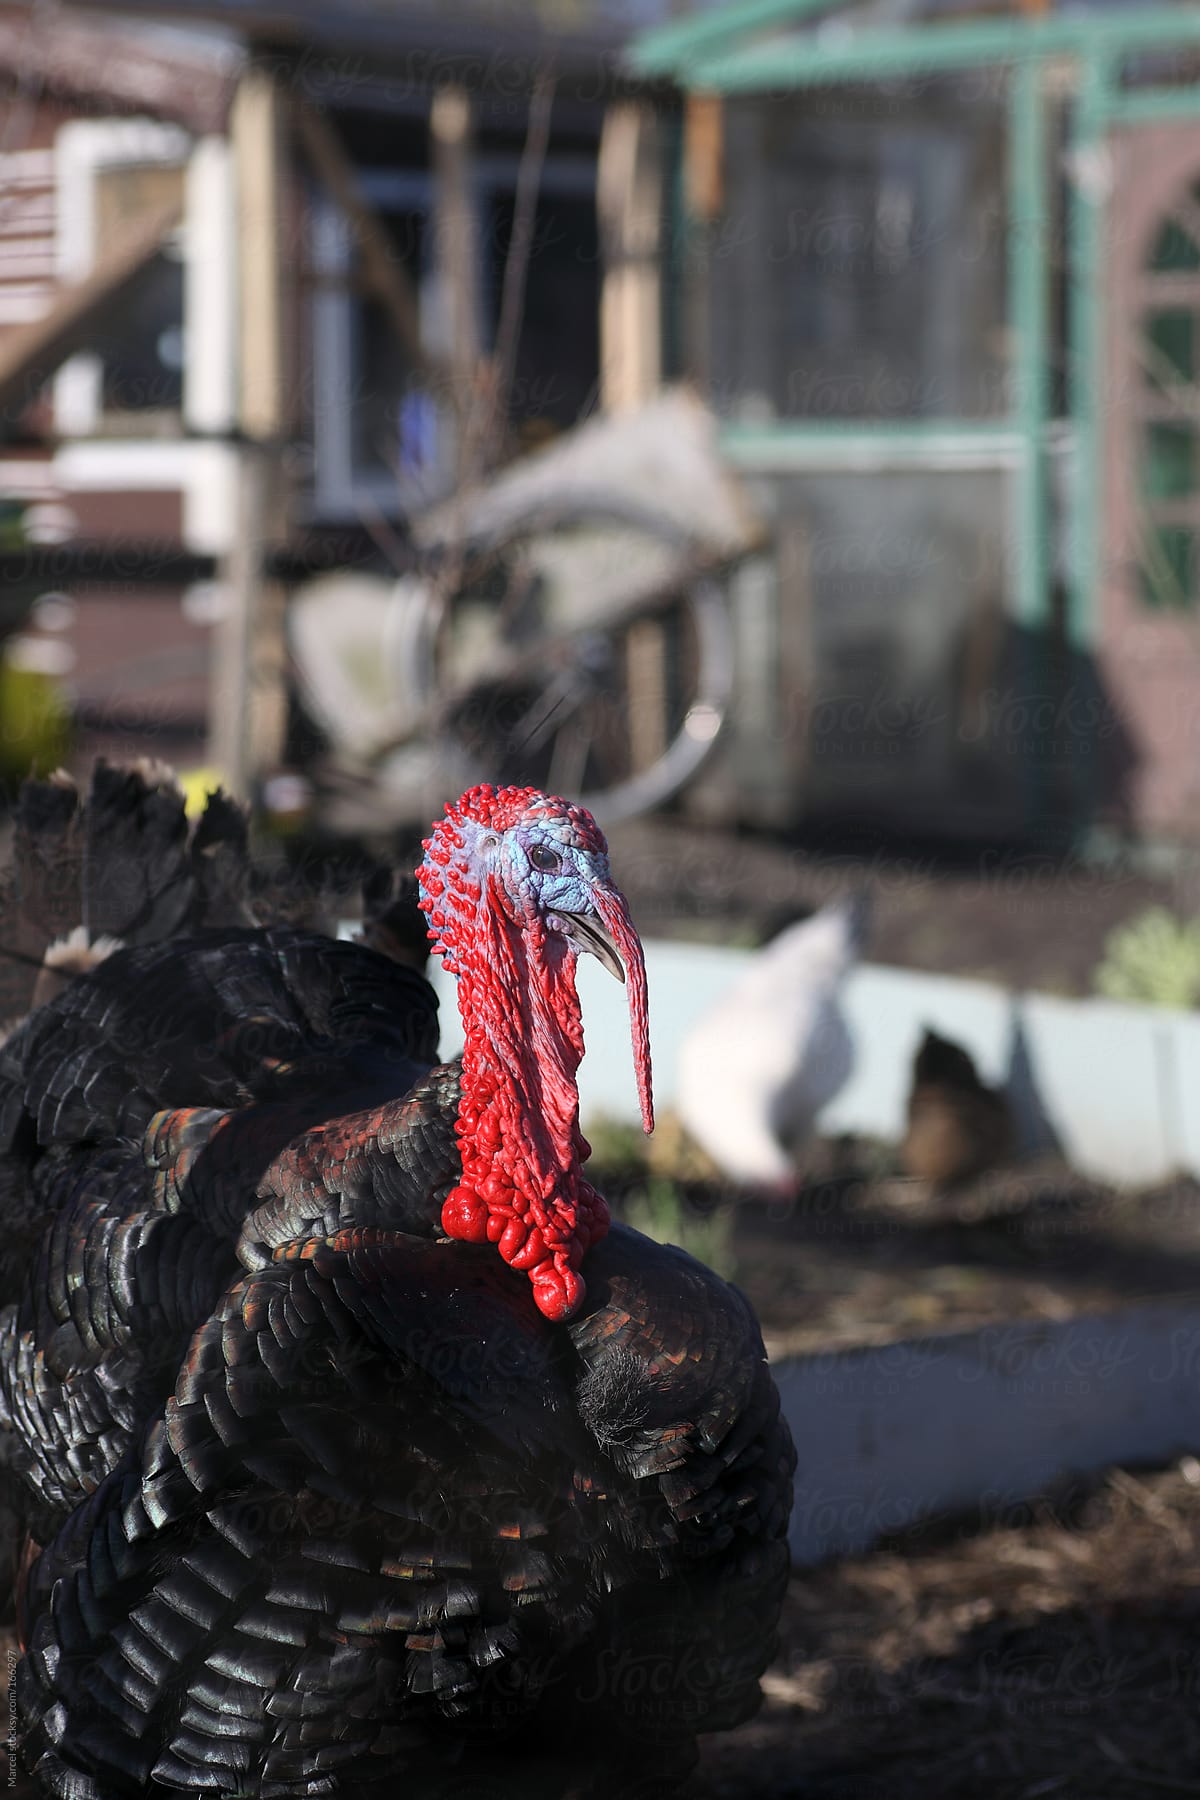 Turkey in a messy backyard